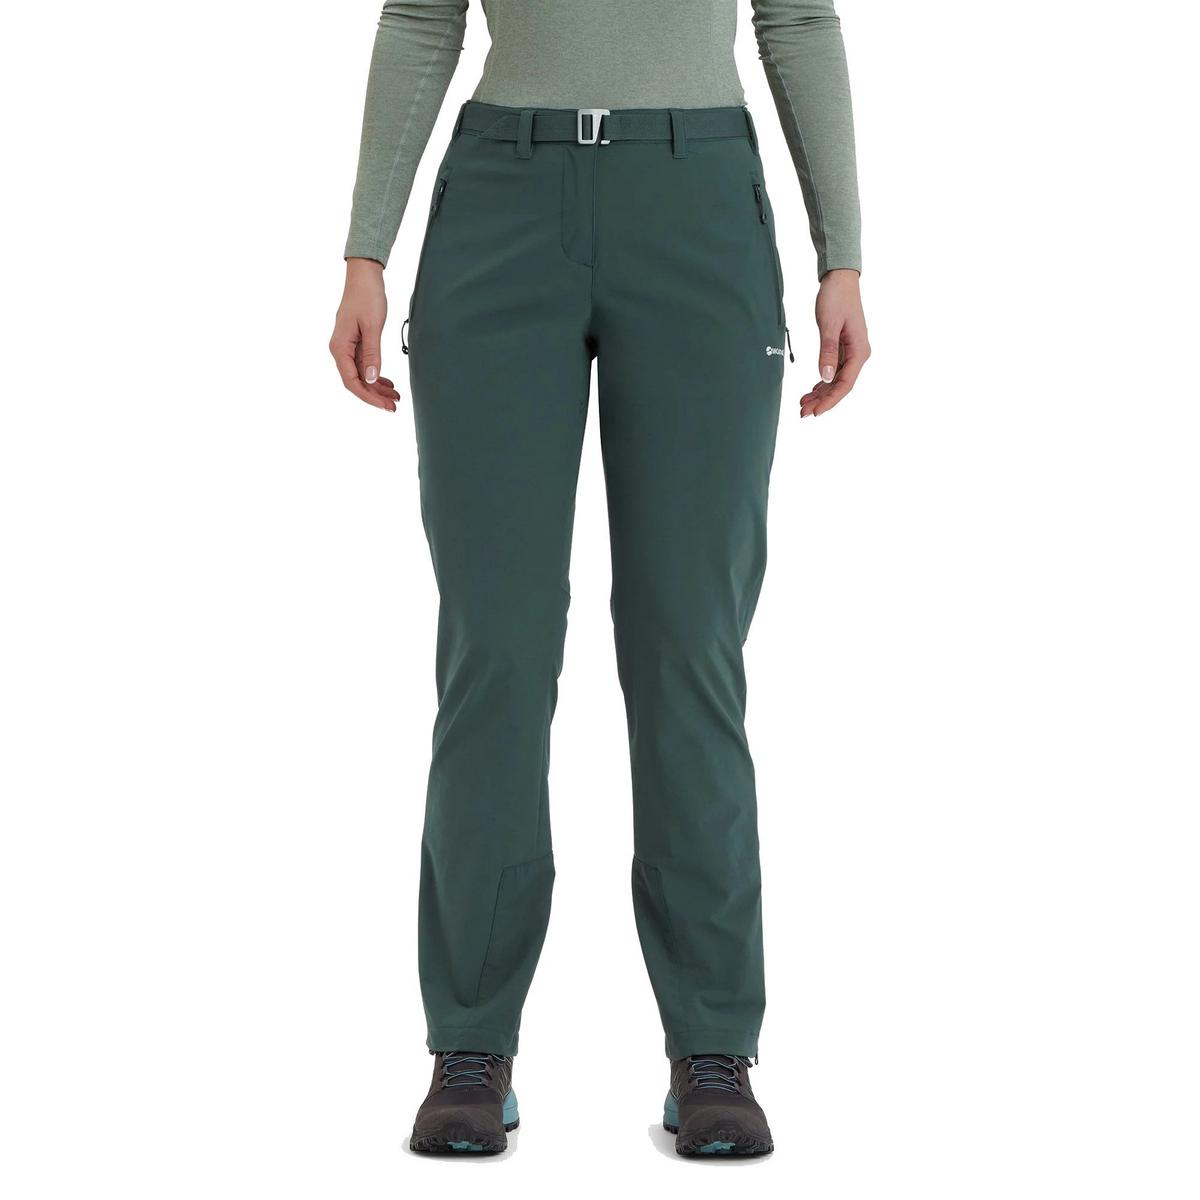 Montane Women's Terra Stretch Pants (Regular) - Green